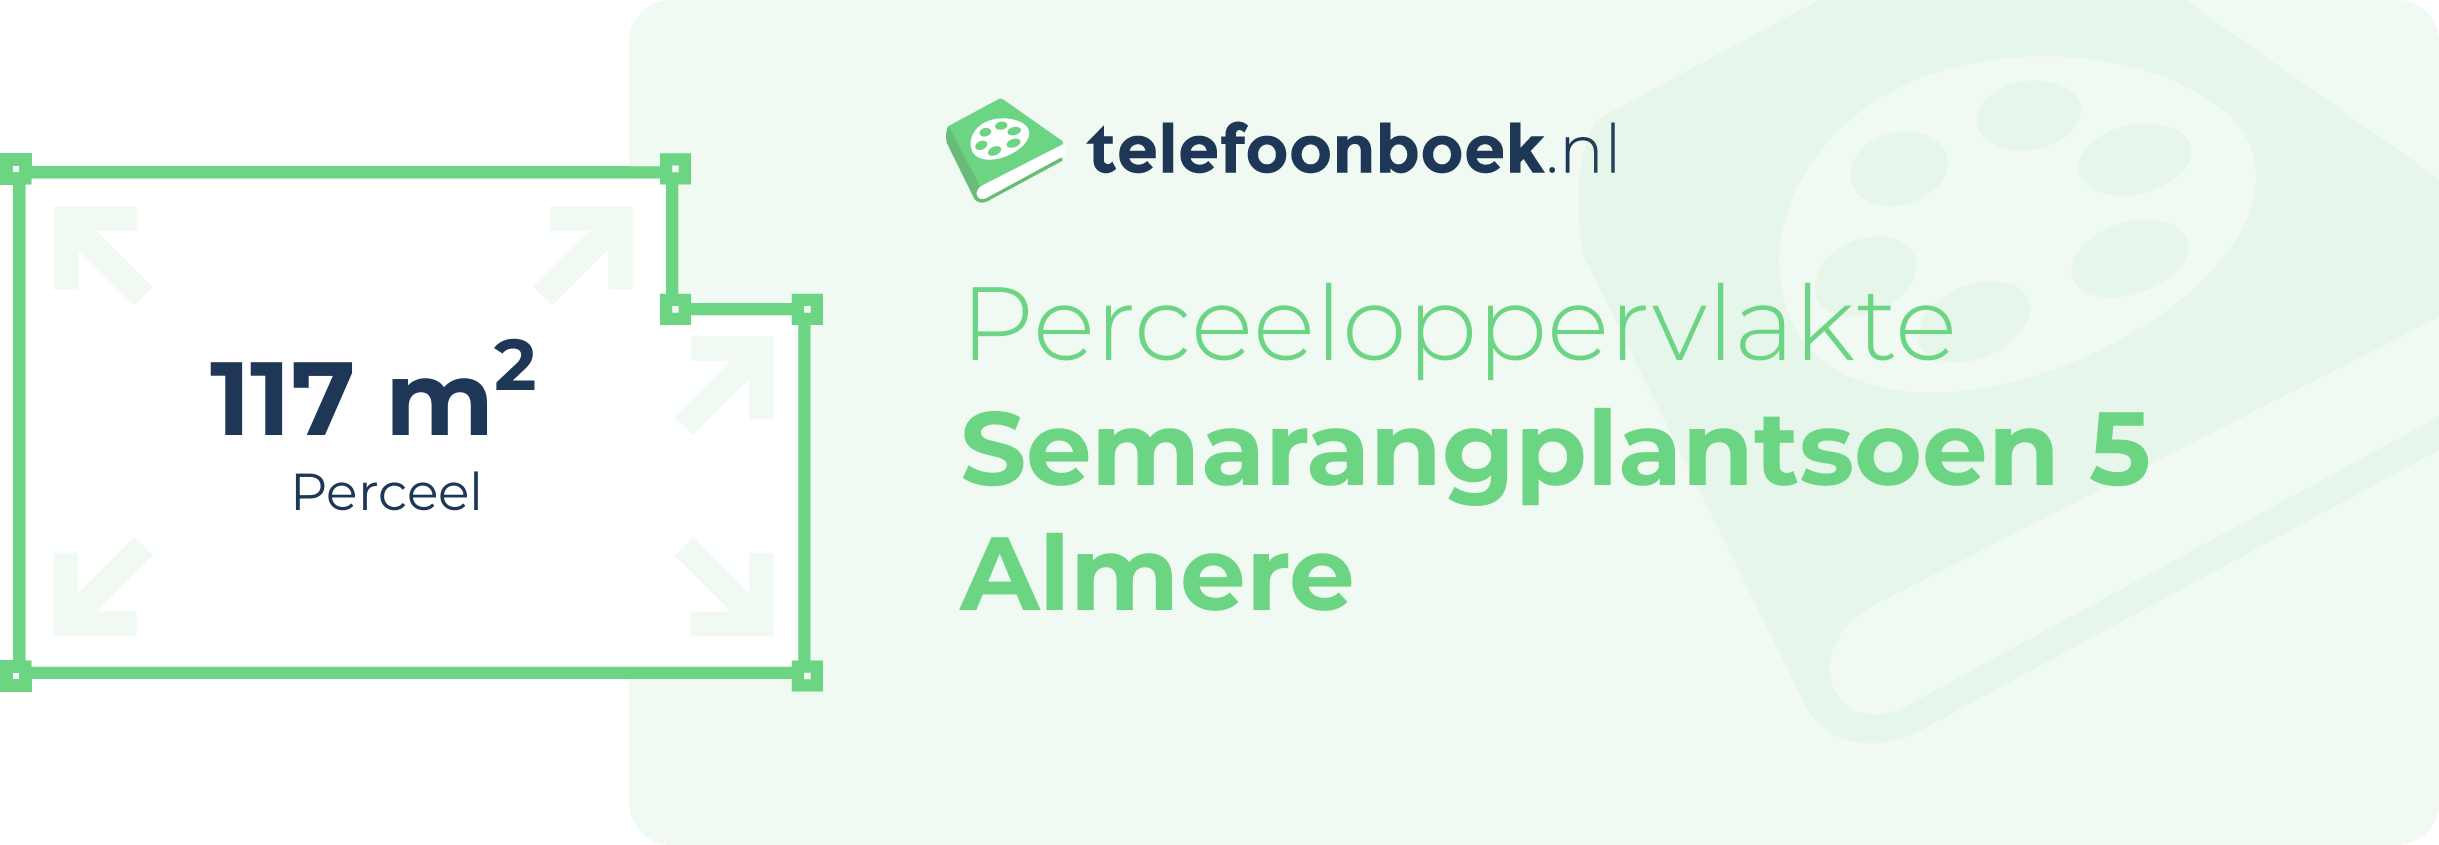 Perceeloppervlakte Semarangplantsoen 5 Almere